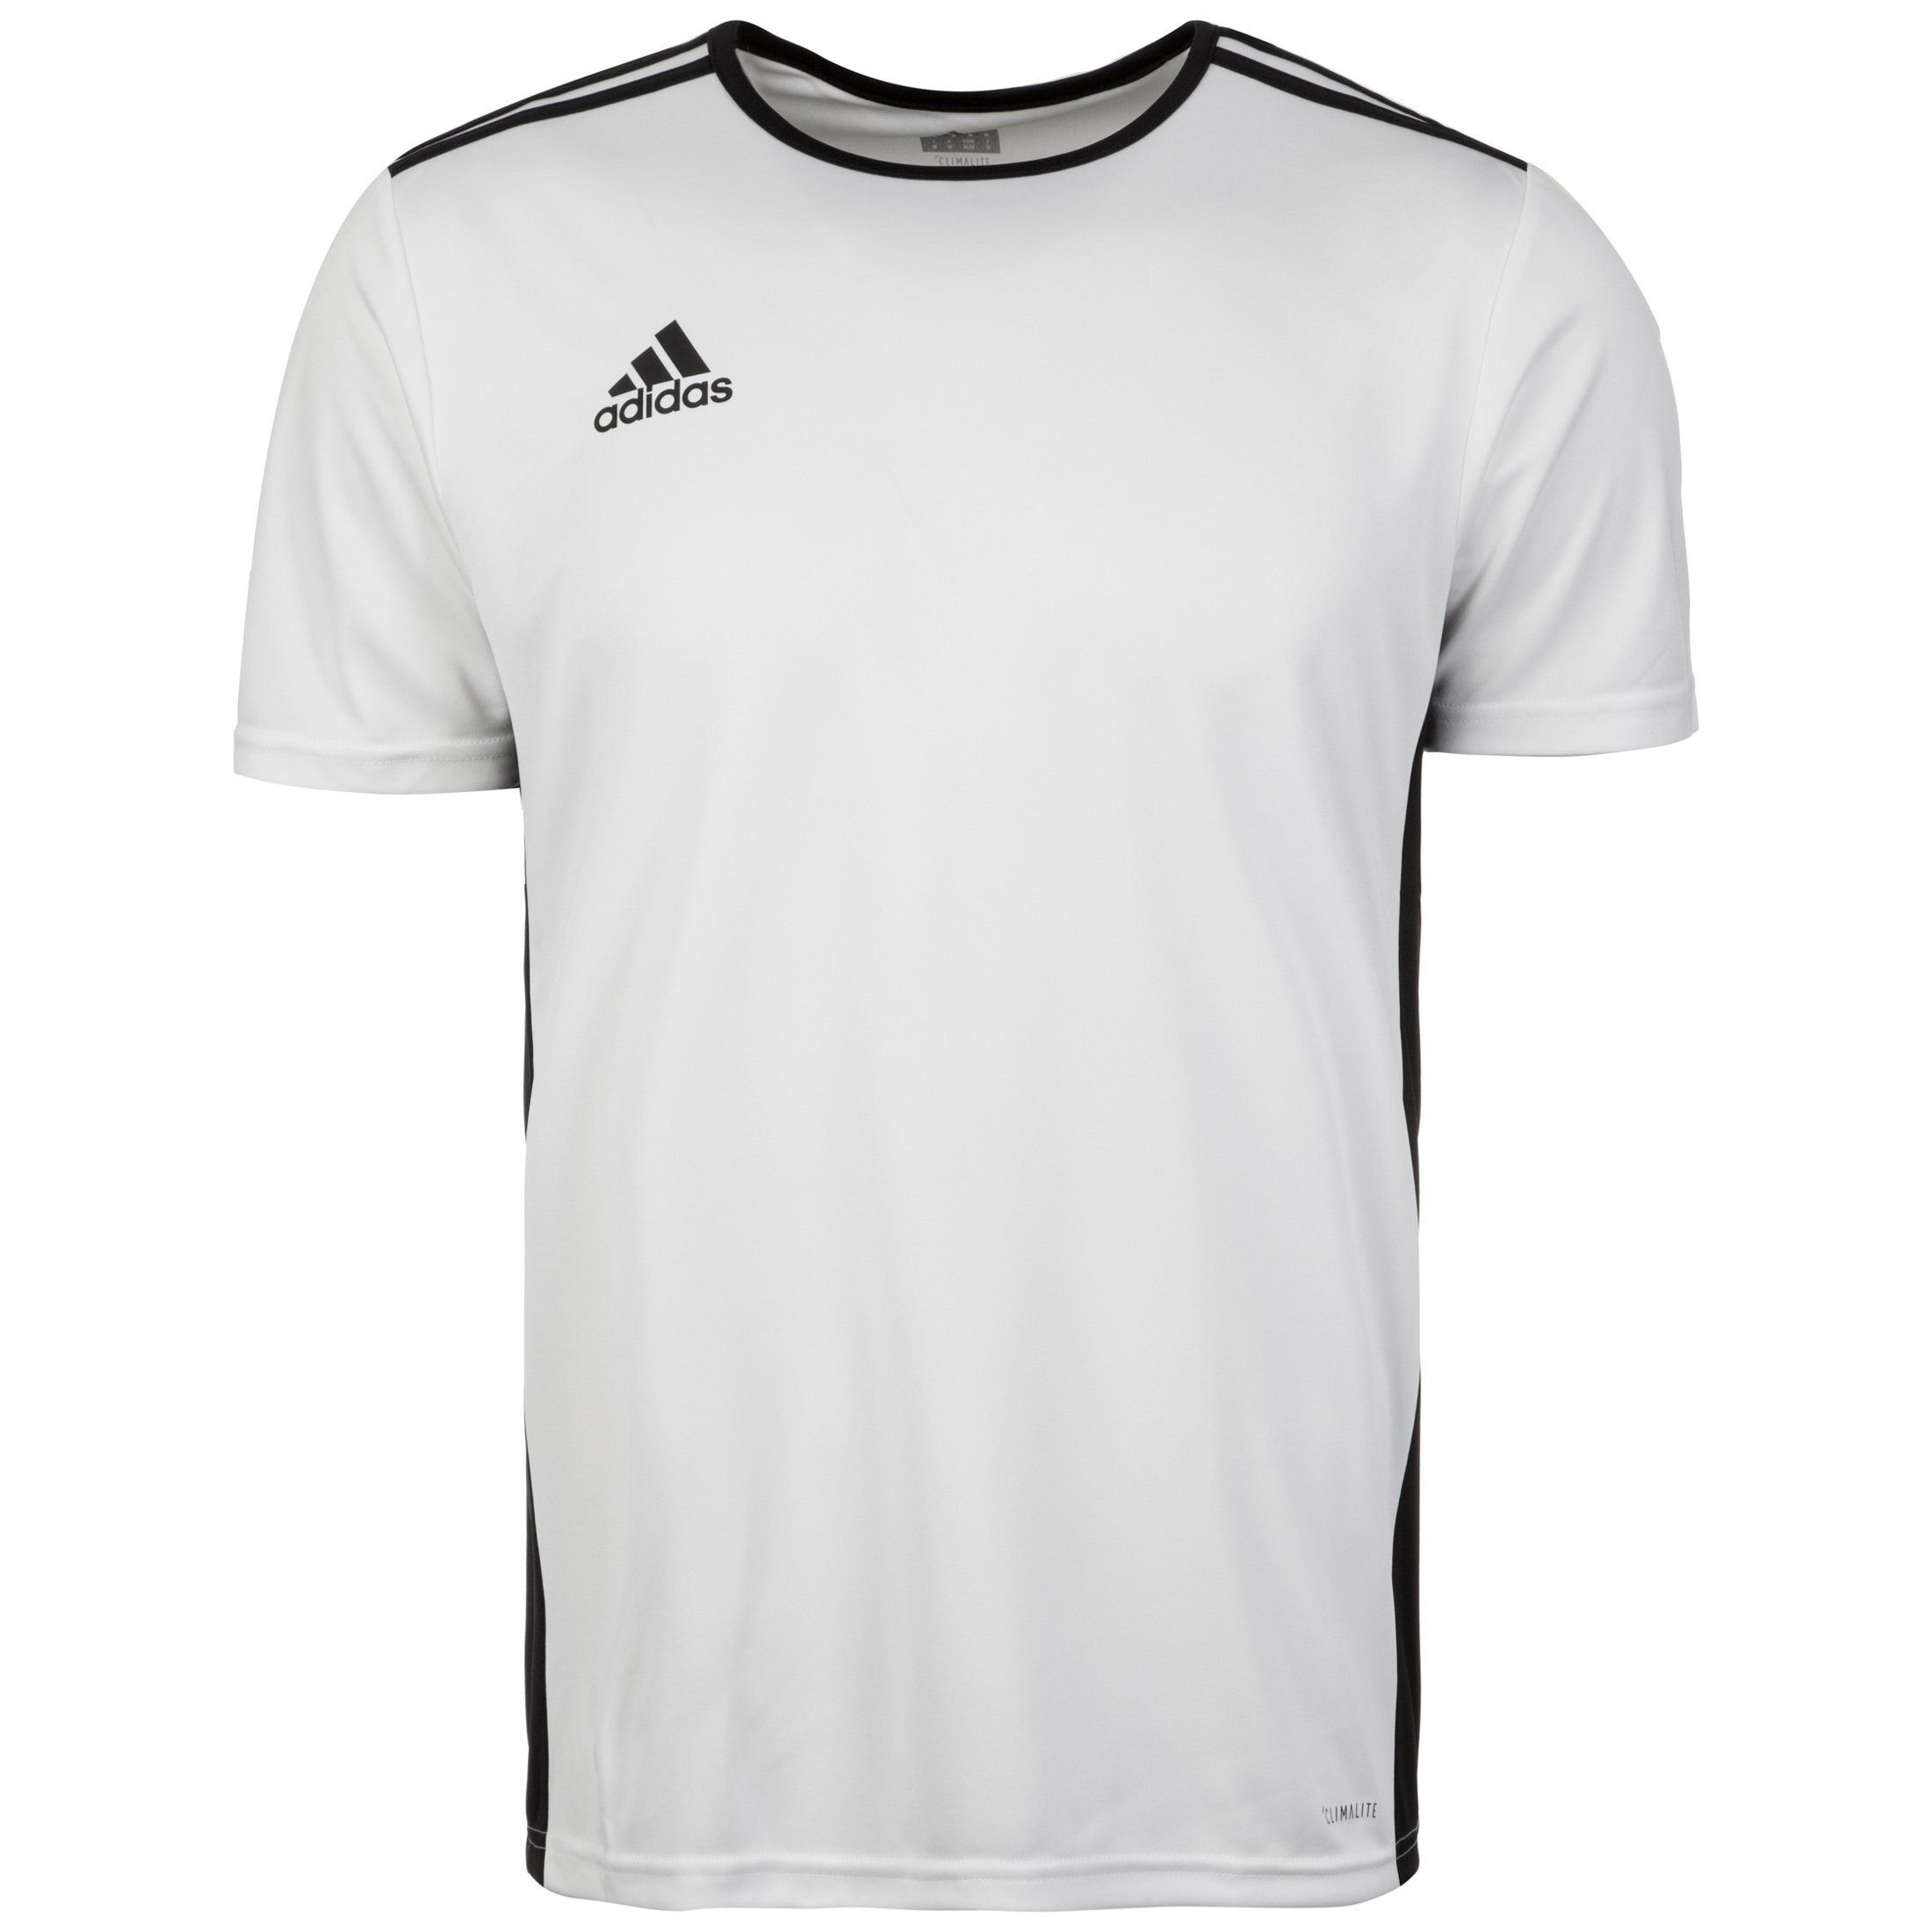 Adidas Performance Fußballtrikot »Entrada 18«, weiß-schwarz